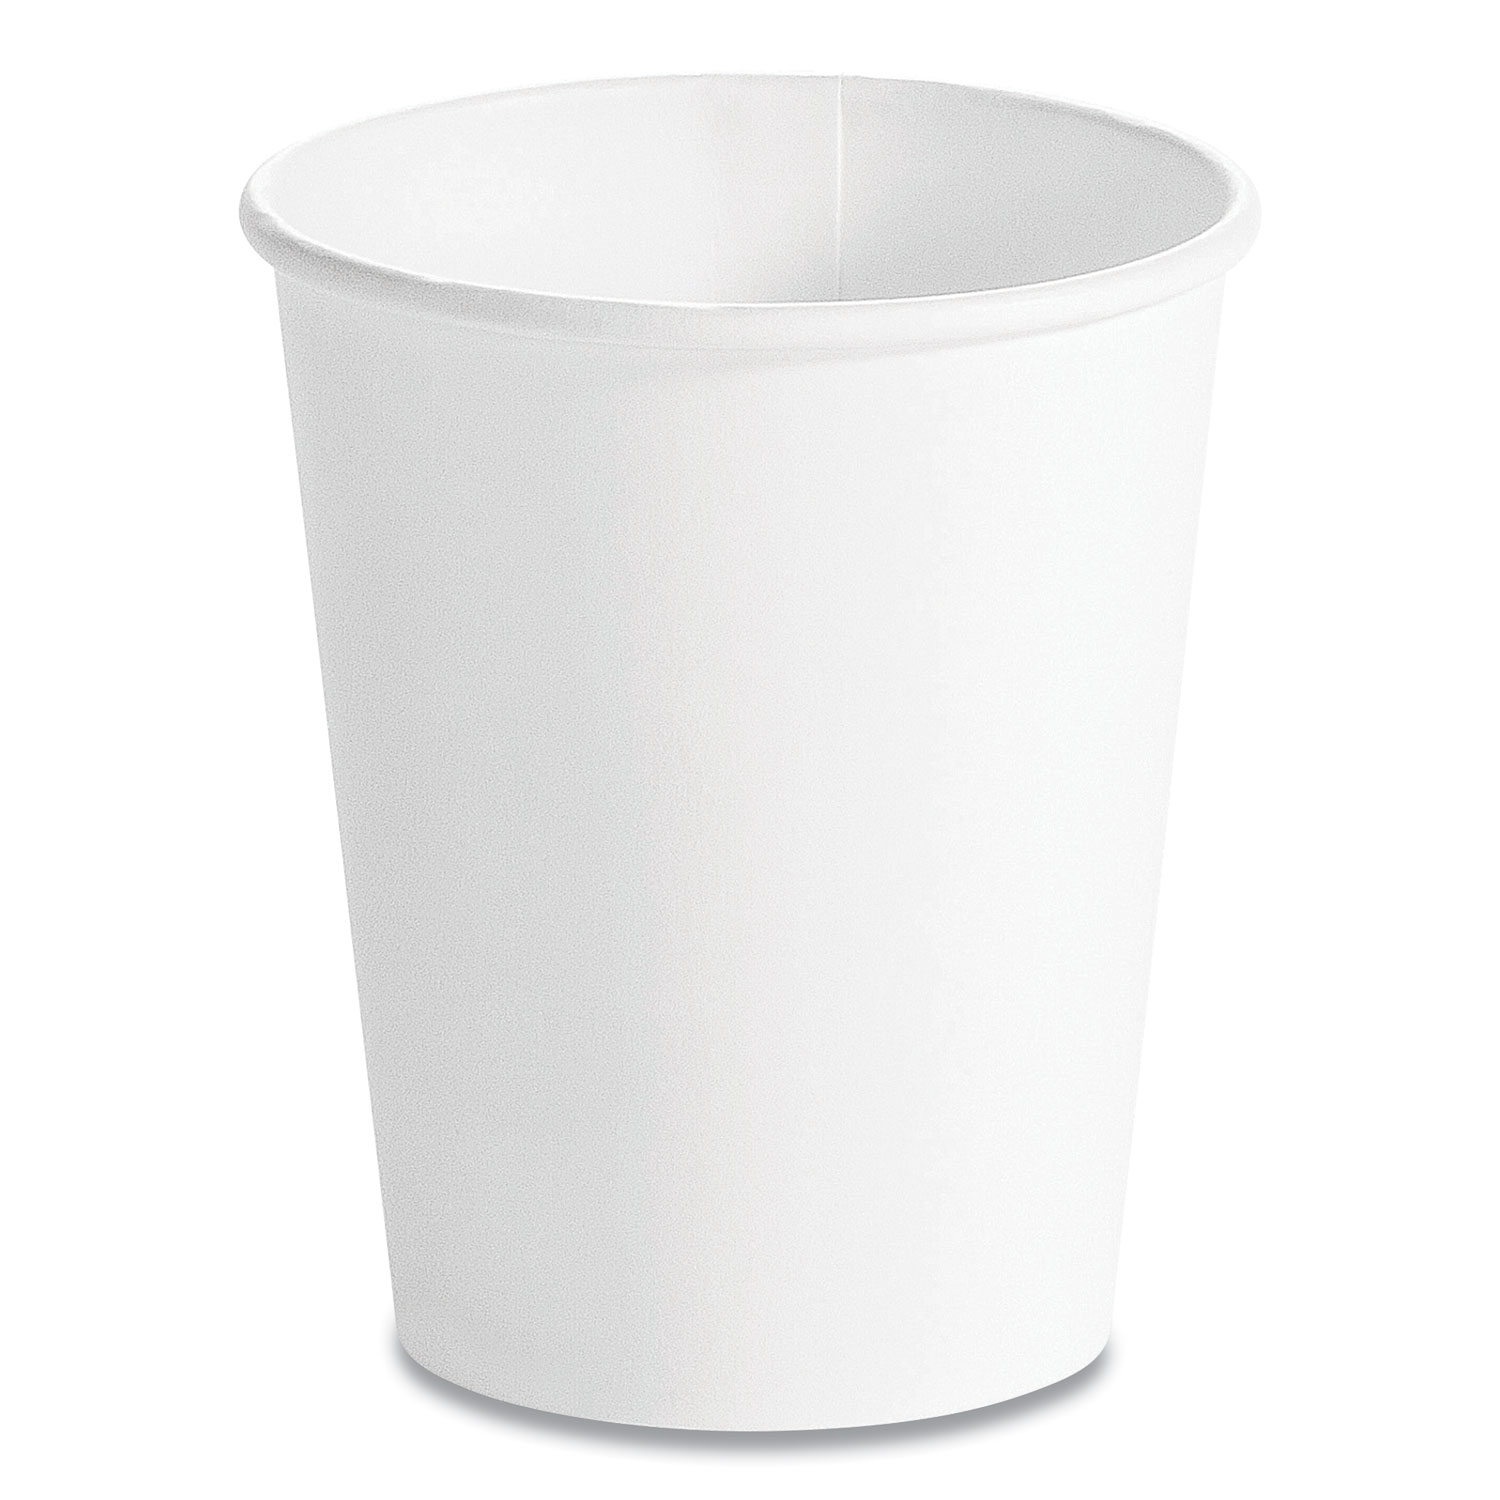  Huhtamaki 62900 Single Wall Hot Cups 8 oz, White, 1,000/Carton (HUH62900) 